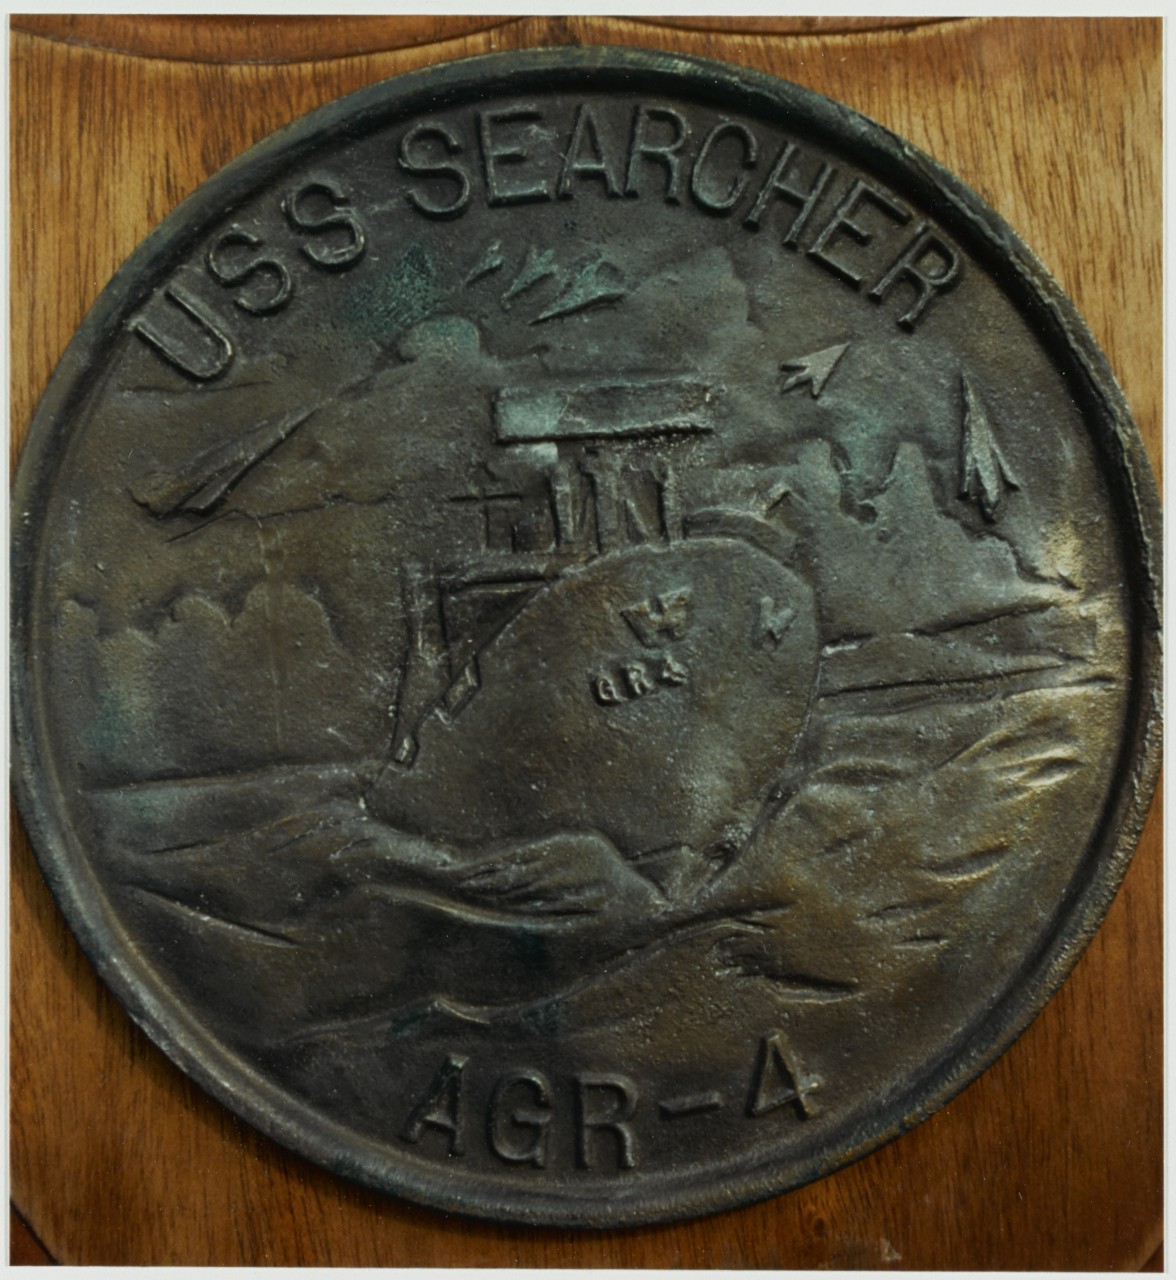 Insignia: USS SEARCHER (AGR-4)